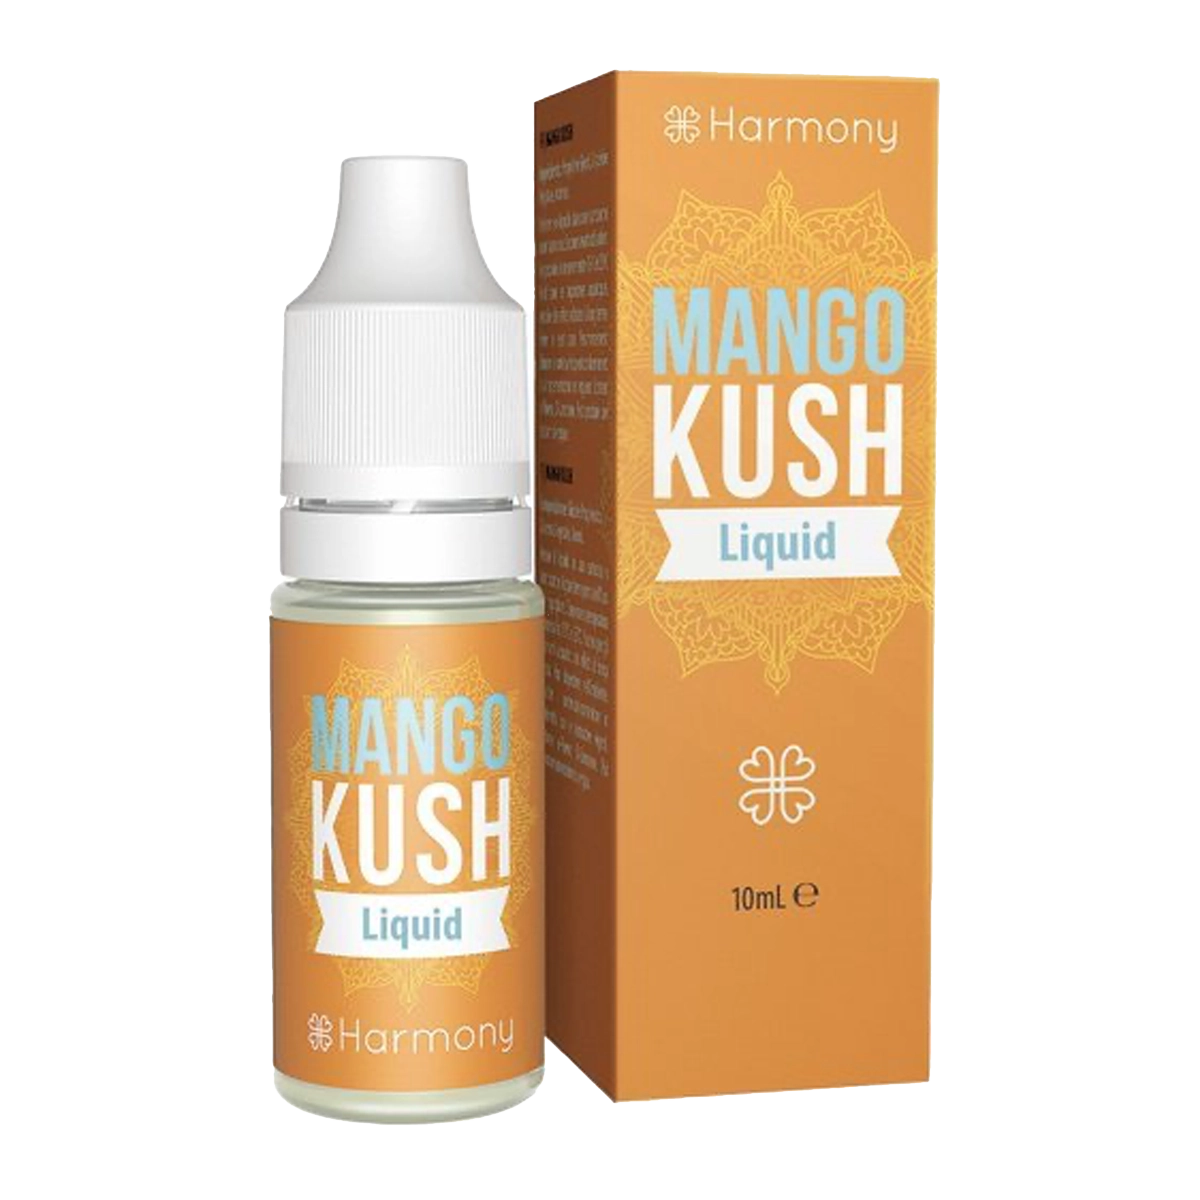 Harmony CBD E-Liquid (6%) - Mang Kush